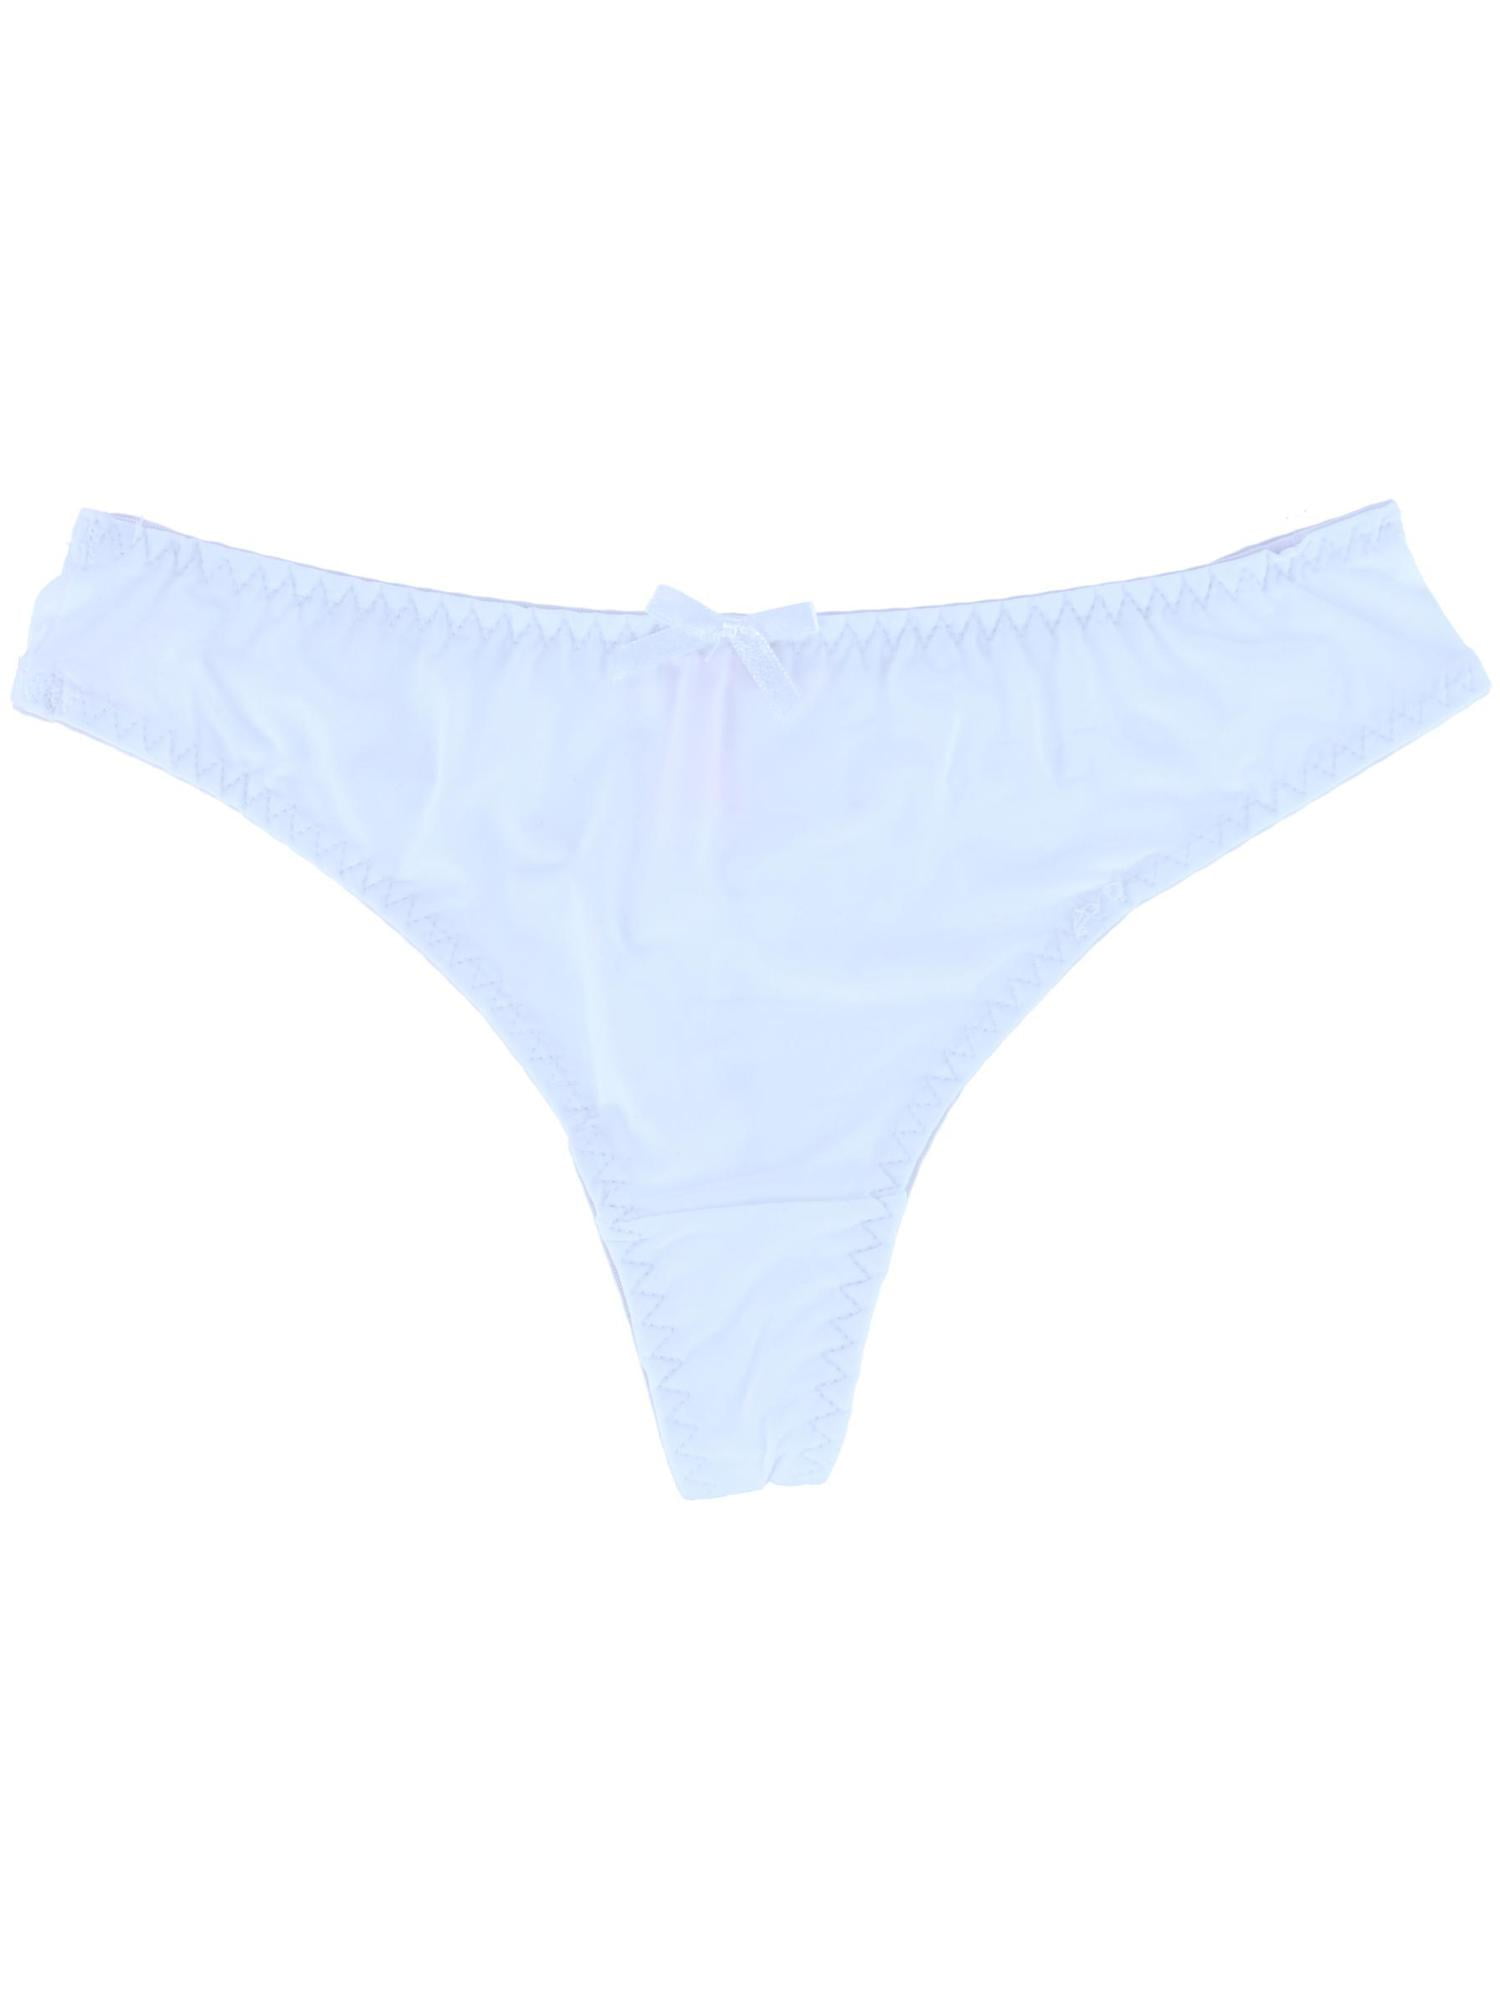 CTM French Cut Underwear (Women) 